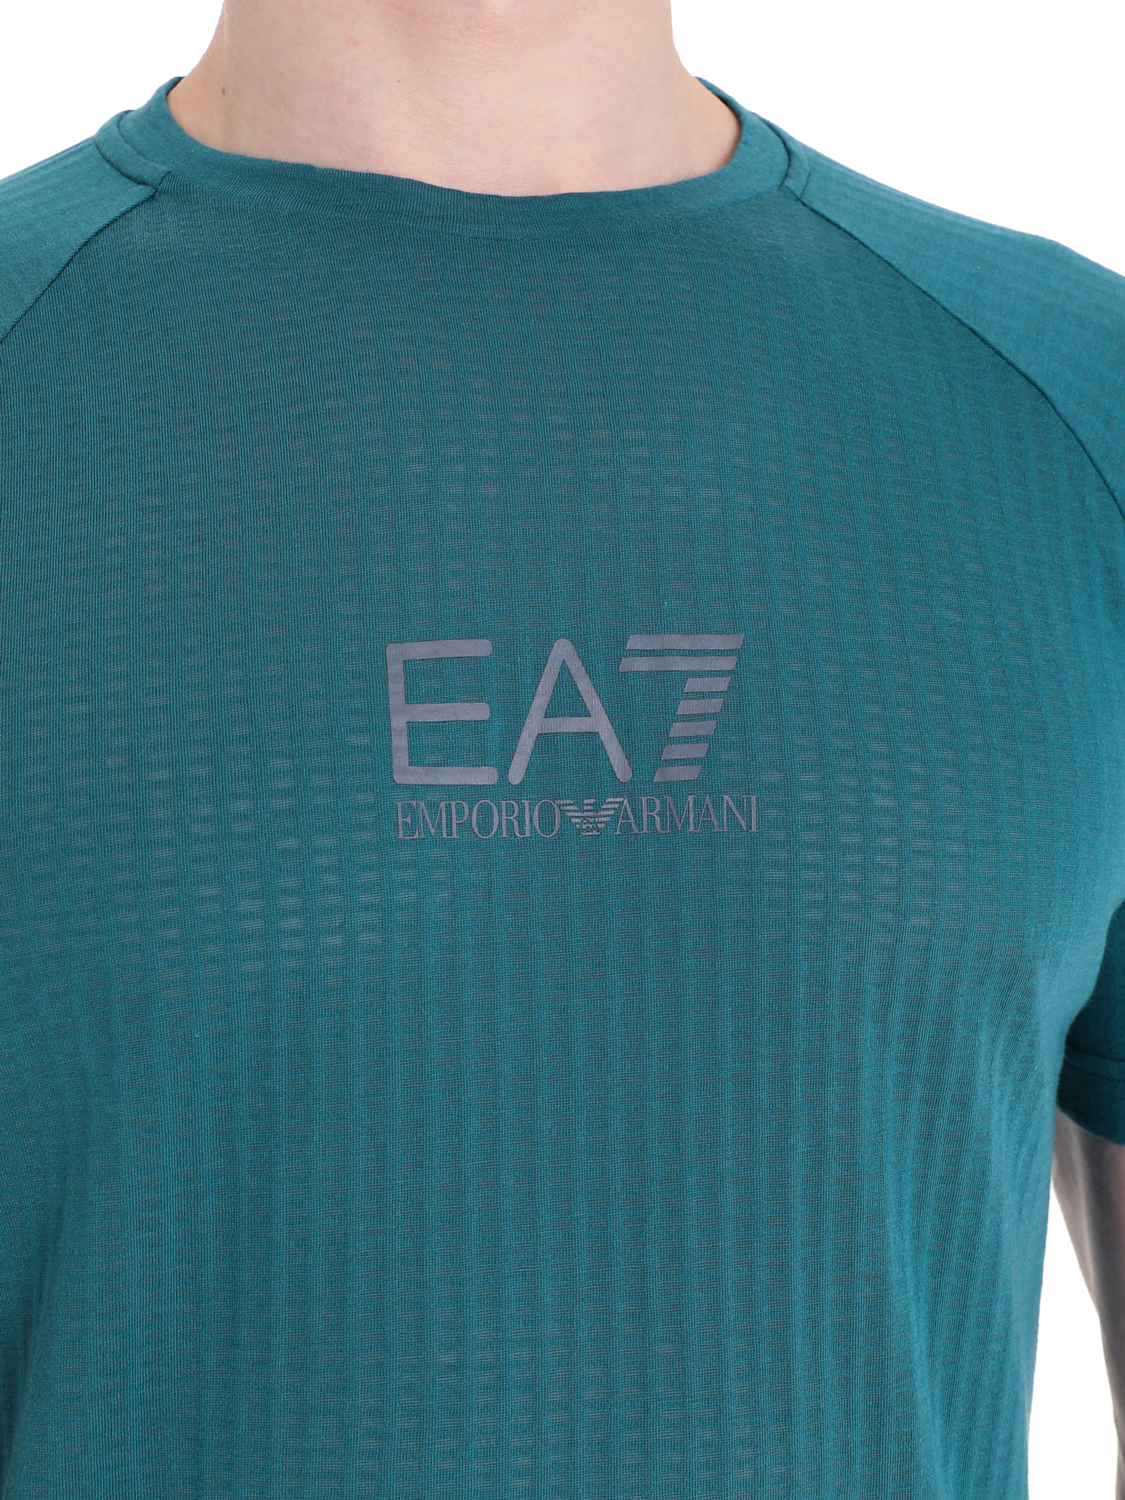 Футболка EA7 Emporio Armani T-Shirt M Mediterranea